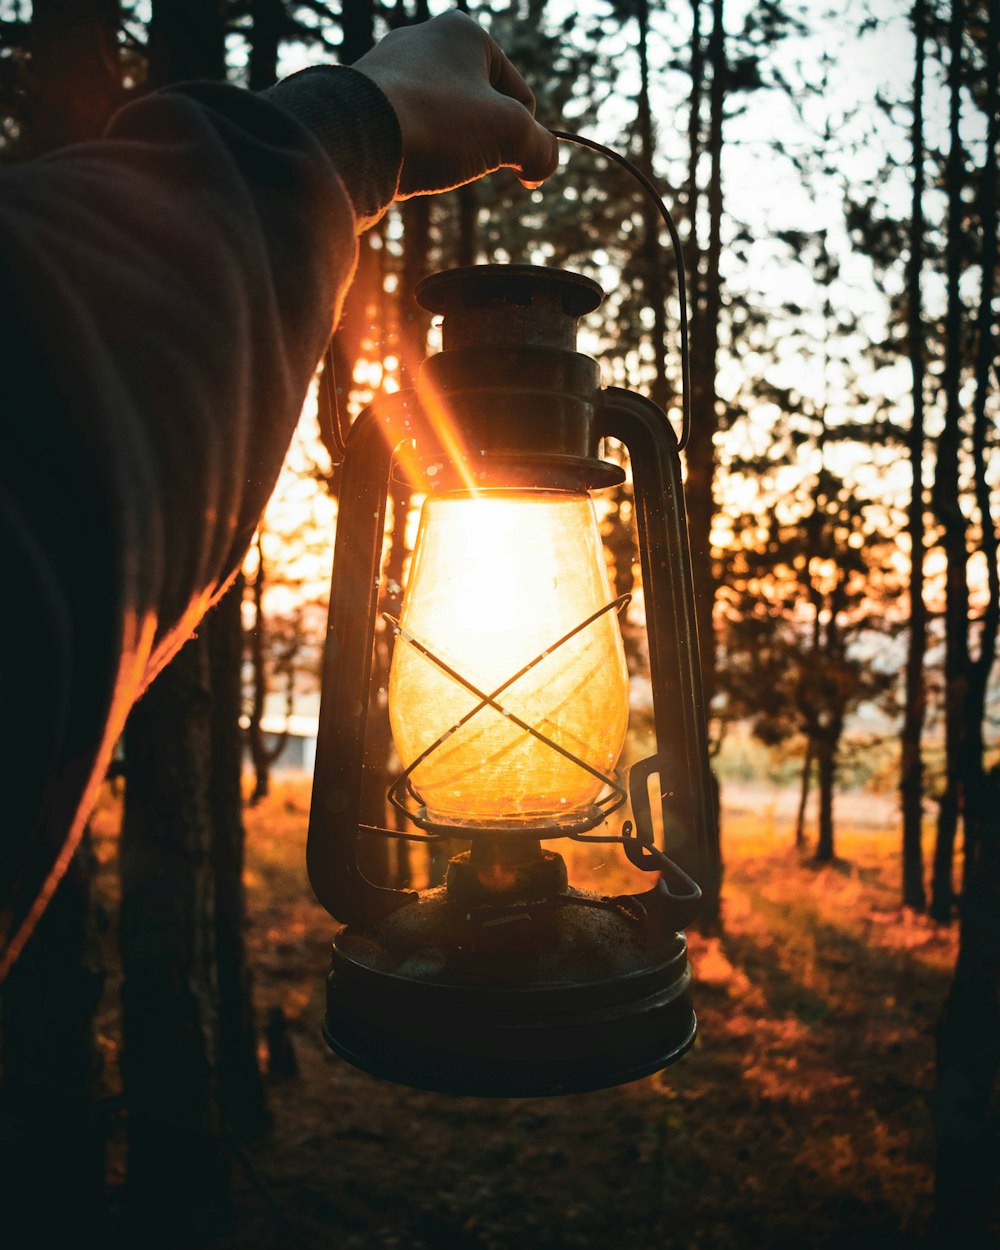 person holding lantern lamp near trees during daytime